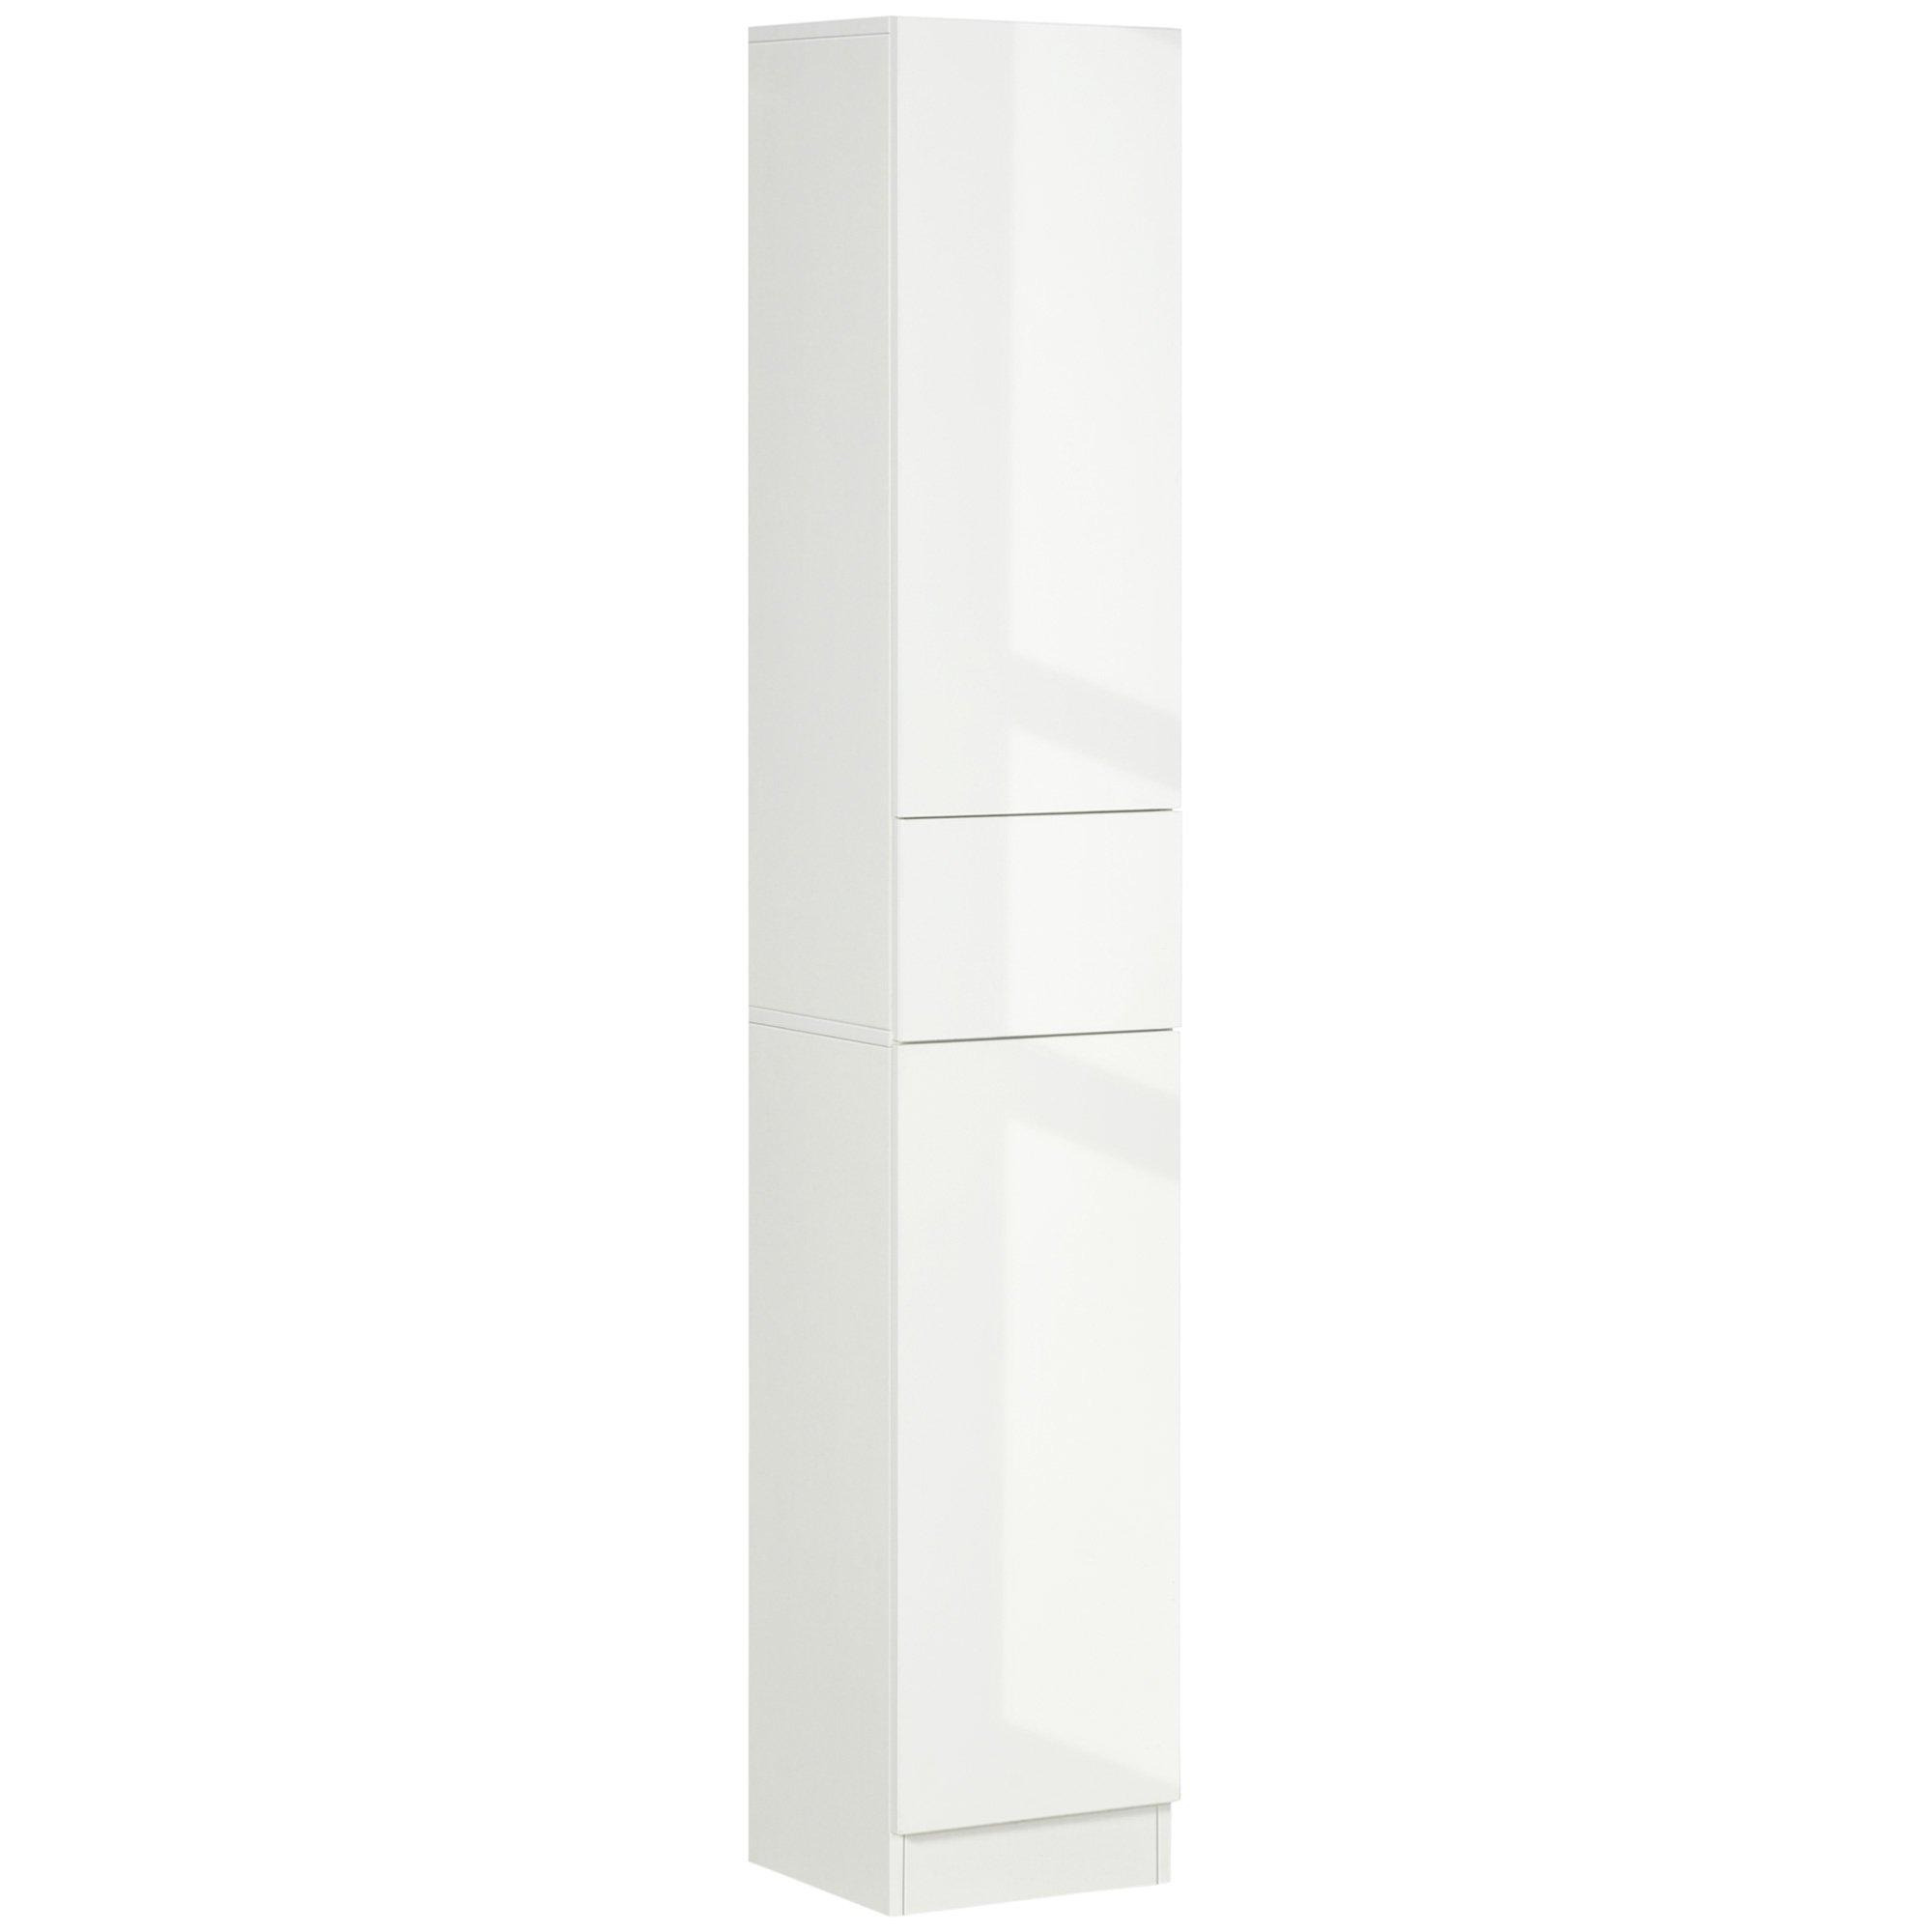 Modern High Gloss Tall Bathroom Cabinet with Adjustable Shelves - image 1